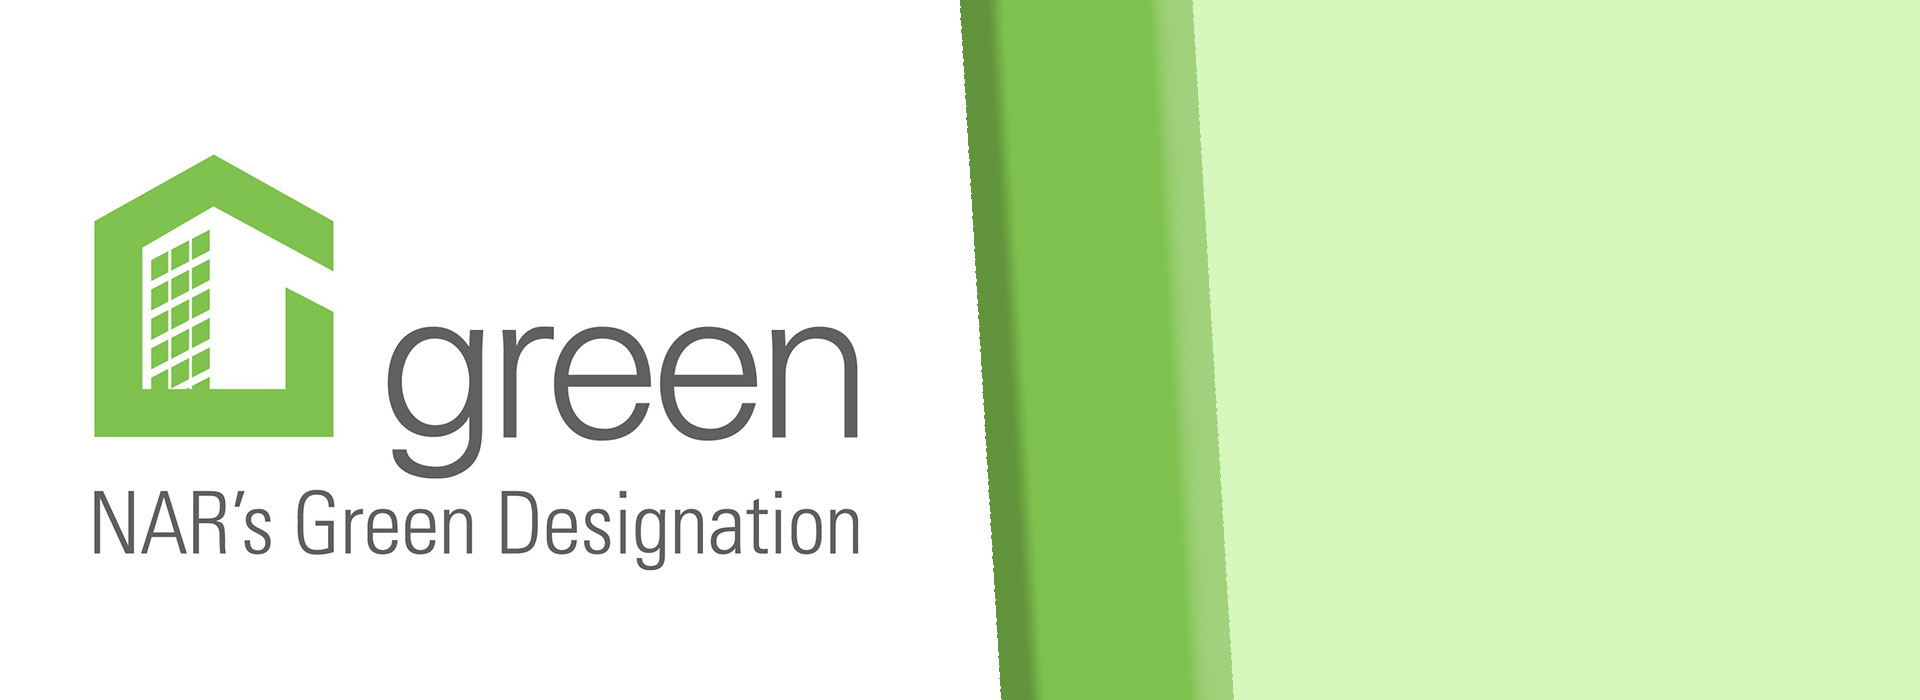 Earn Your Green Designation December 19-20th